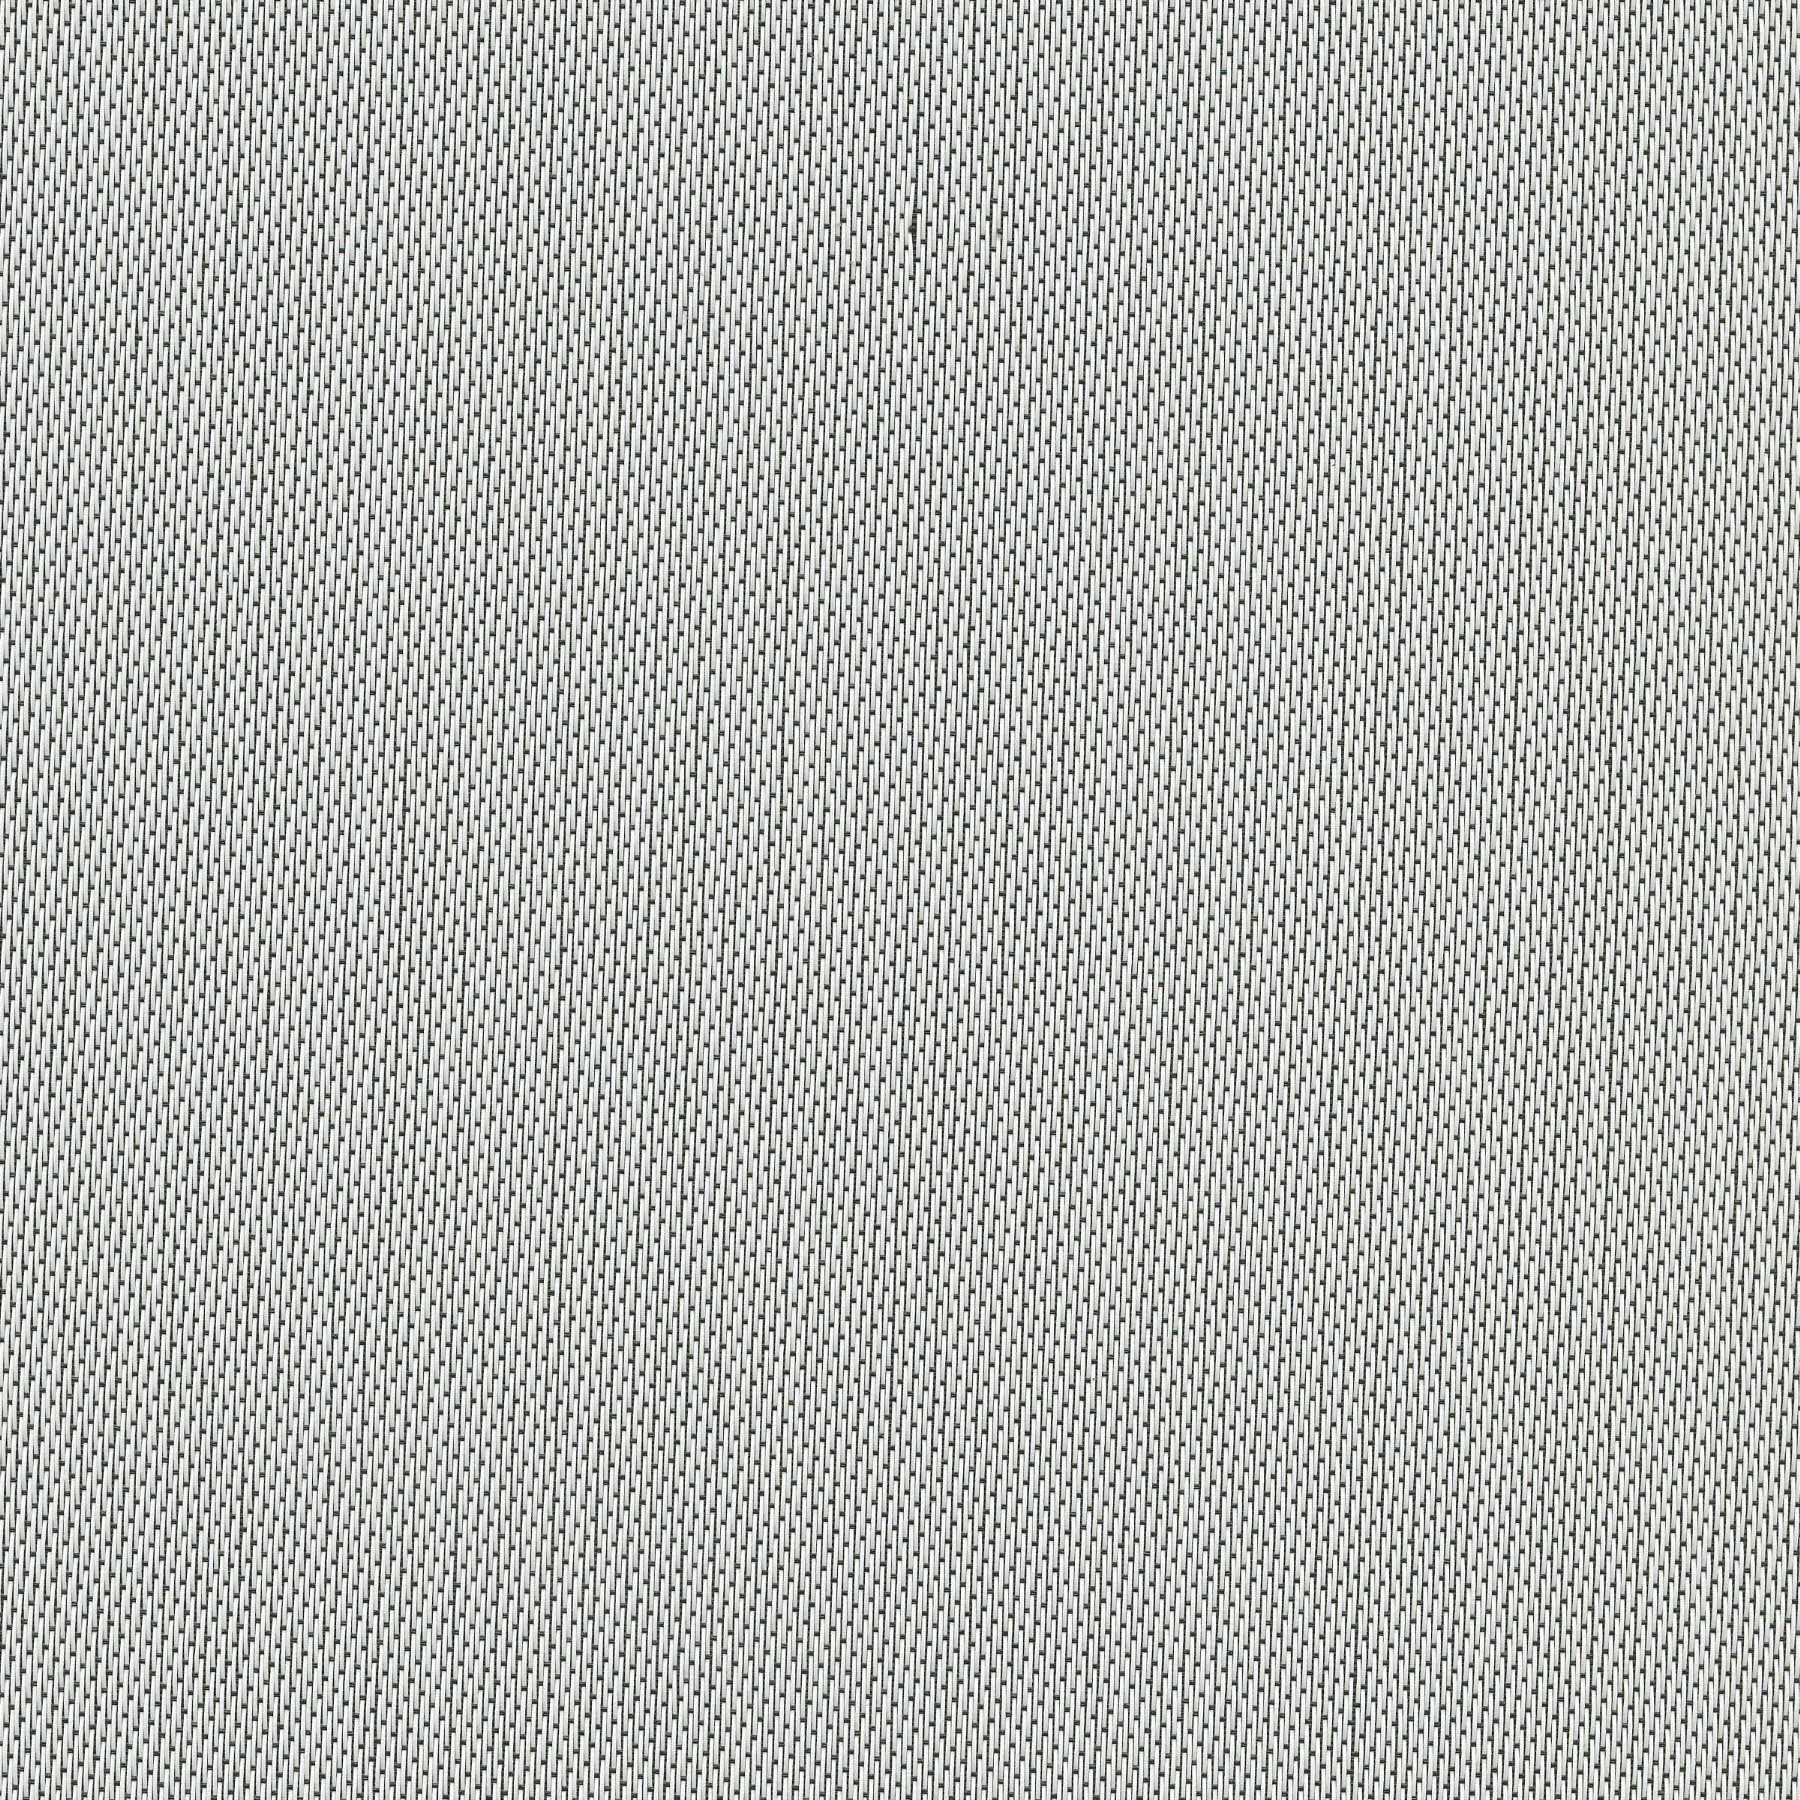 Altex - Fabric - SHEERWEAVE 2705 - Charcoal/White - 175